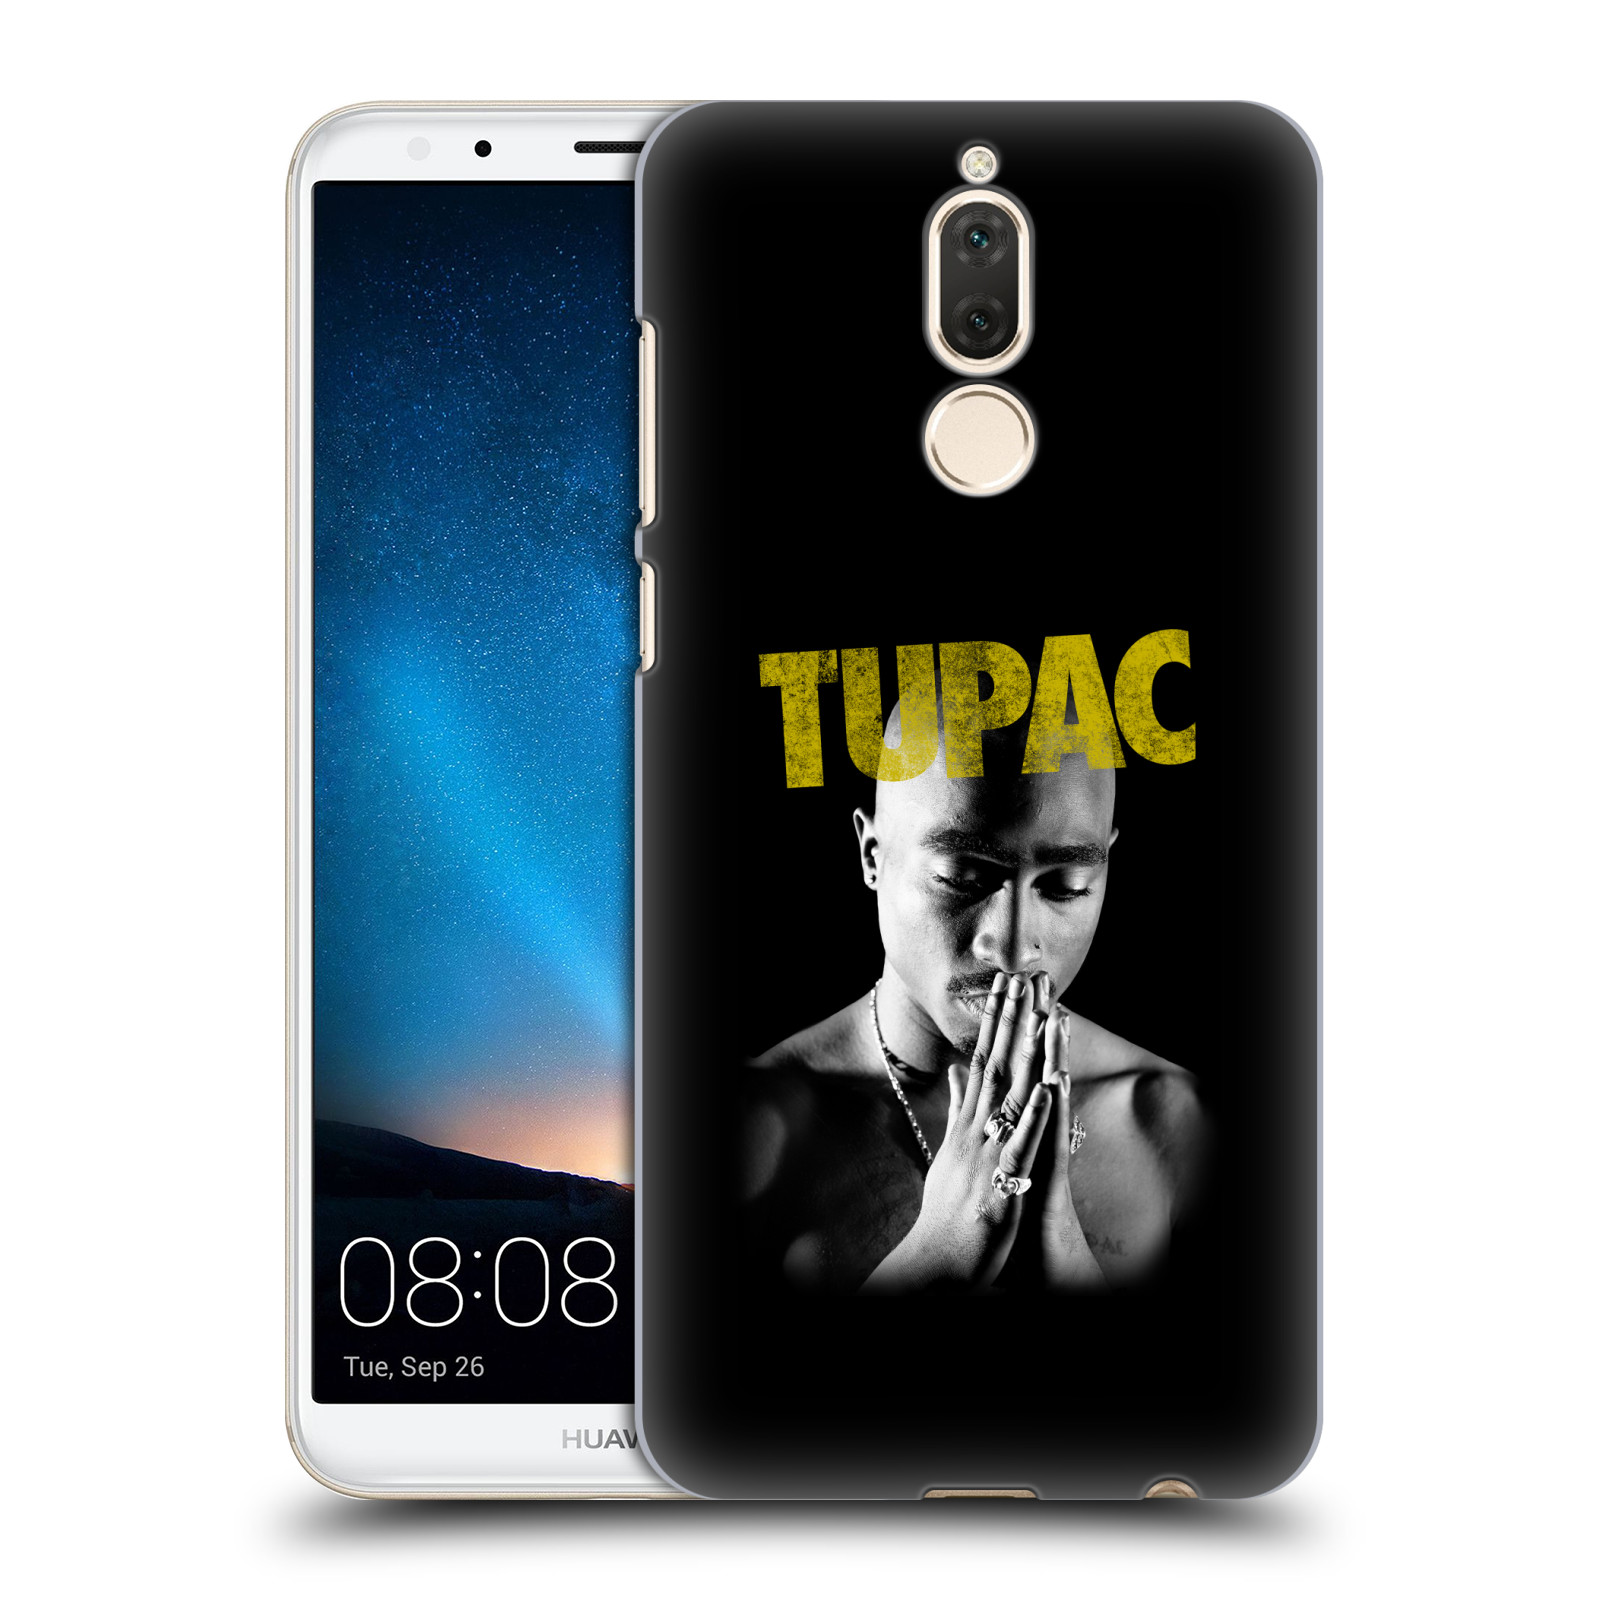 HEAD CASE plastový obal na mobil Huawei Mate 10 LITE Zpěvák rapper Tupac Shakur 2Pac zlatý nadpis